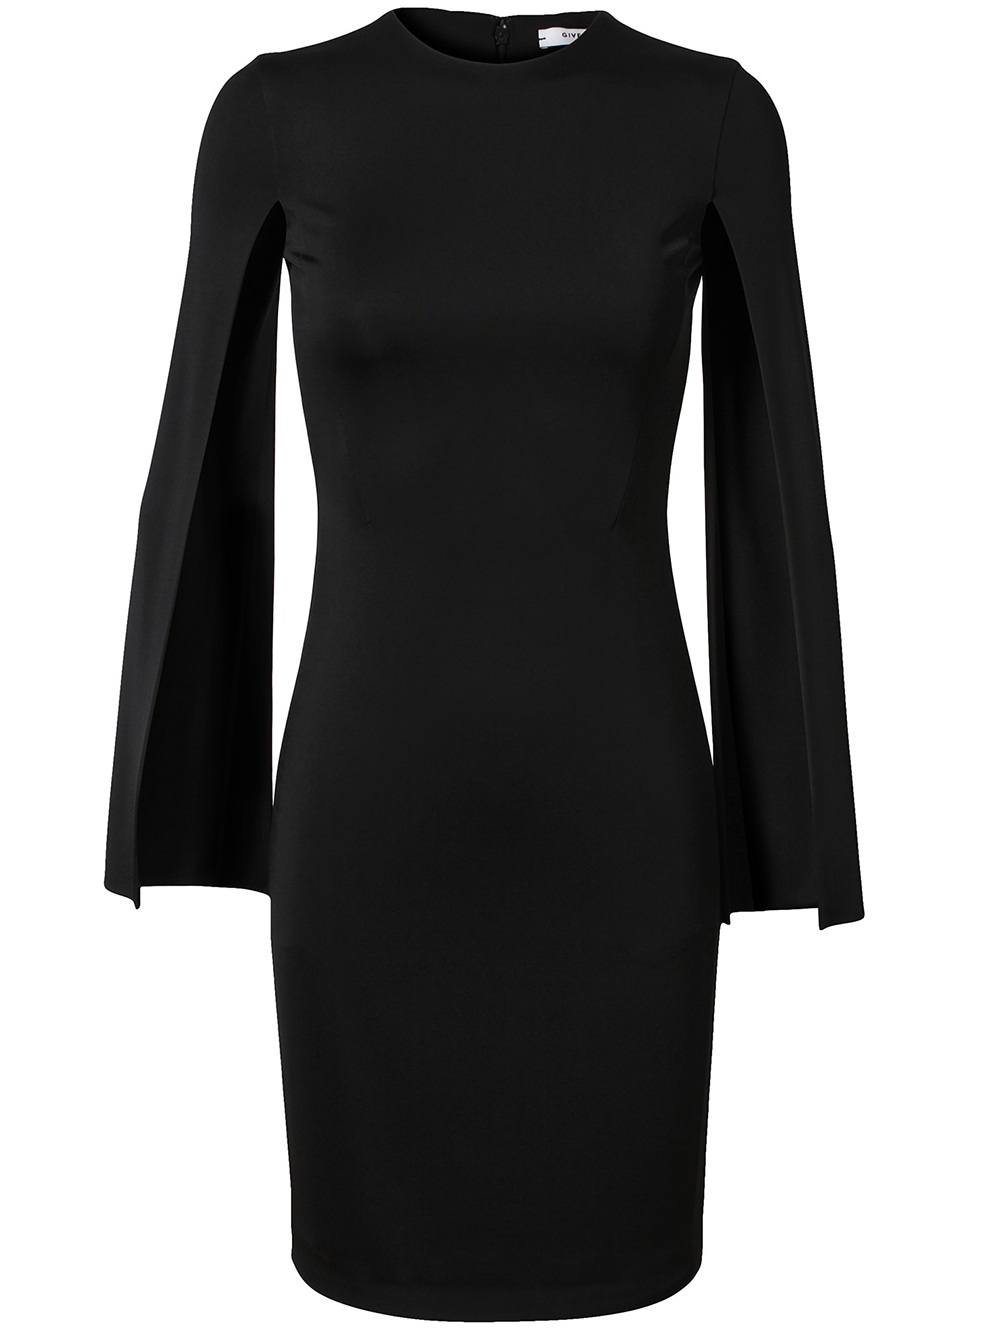 Givenchy Technosatin Dress in Black | Lyst